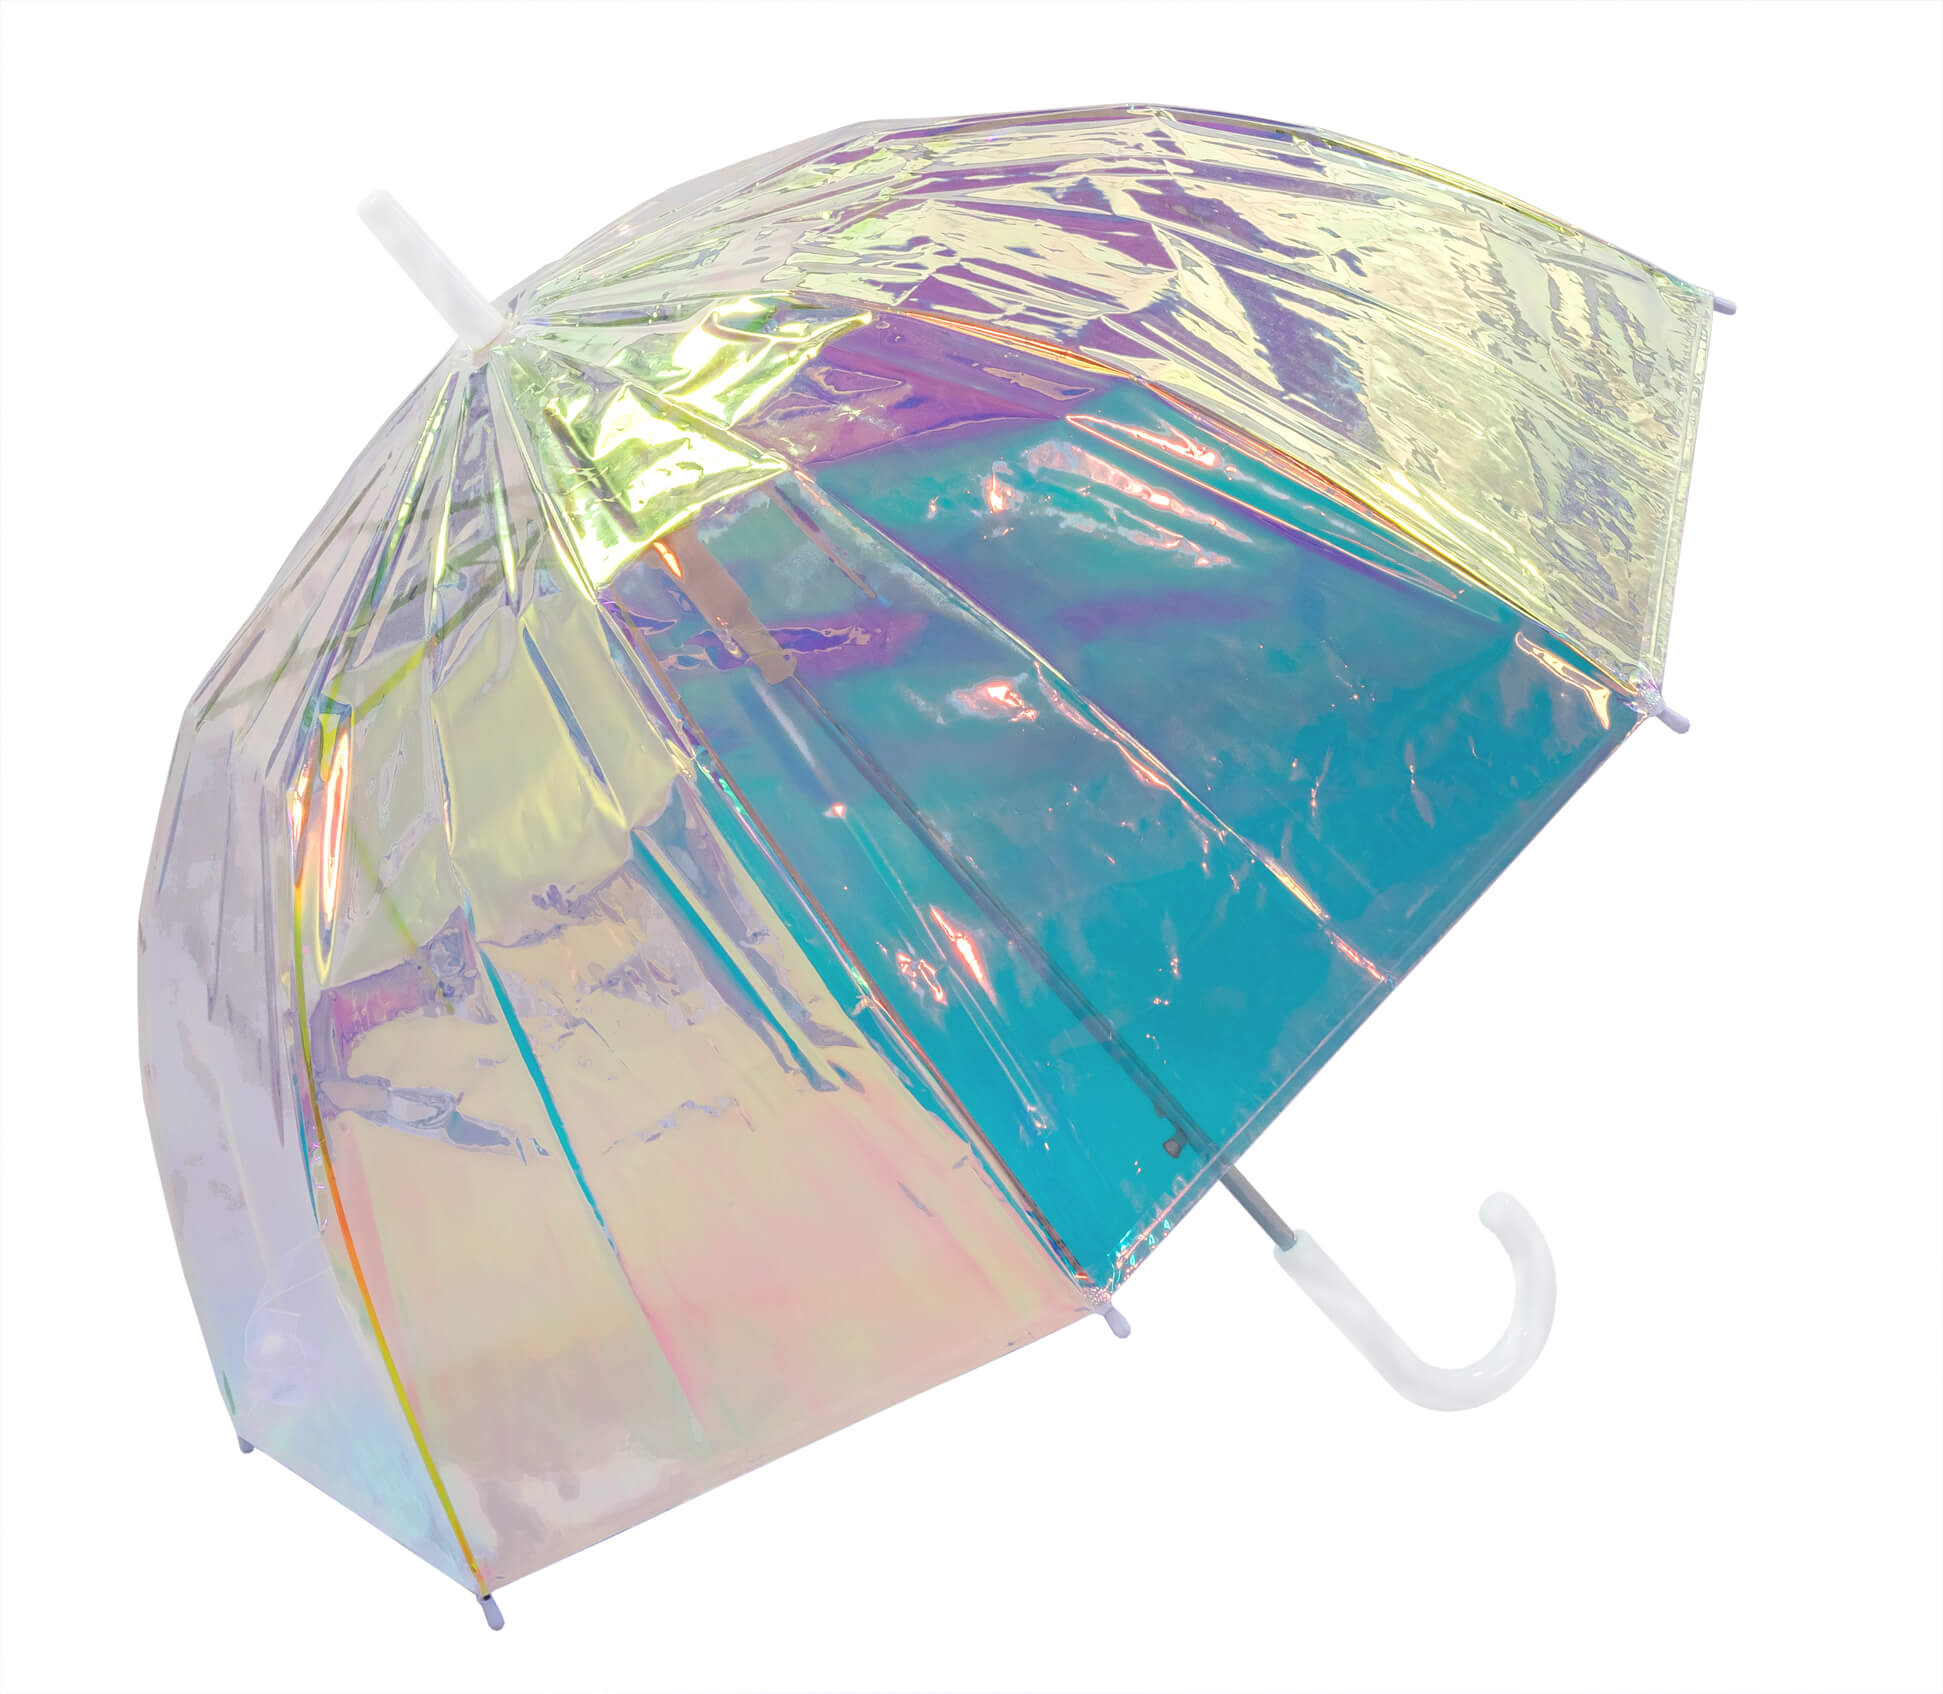 Iridescent Dome Umbrella Auto Open (18004)